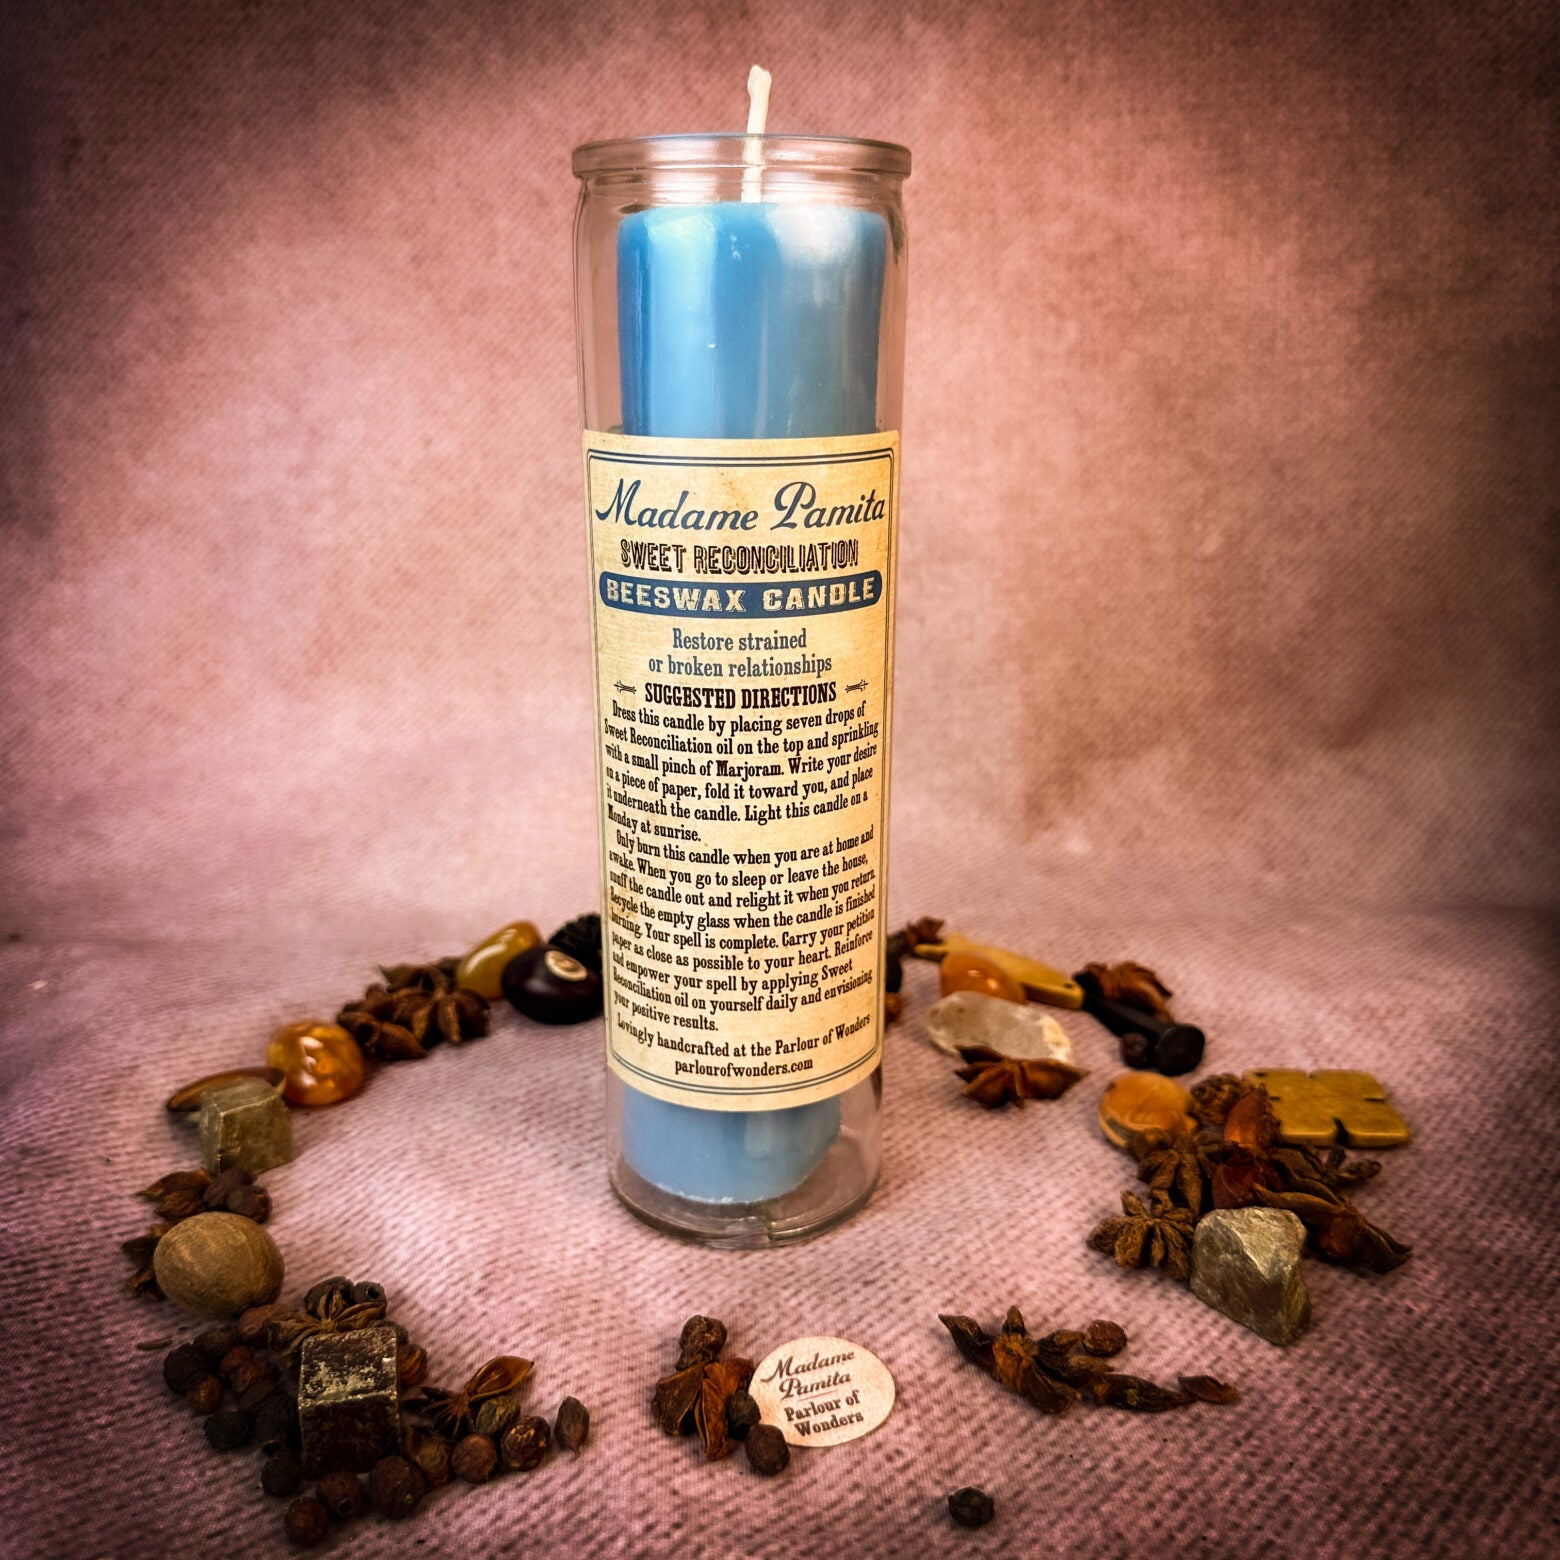 Madame Pamita Sweet Reconciliation Beeswax Vigil Candle